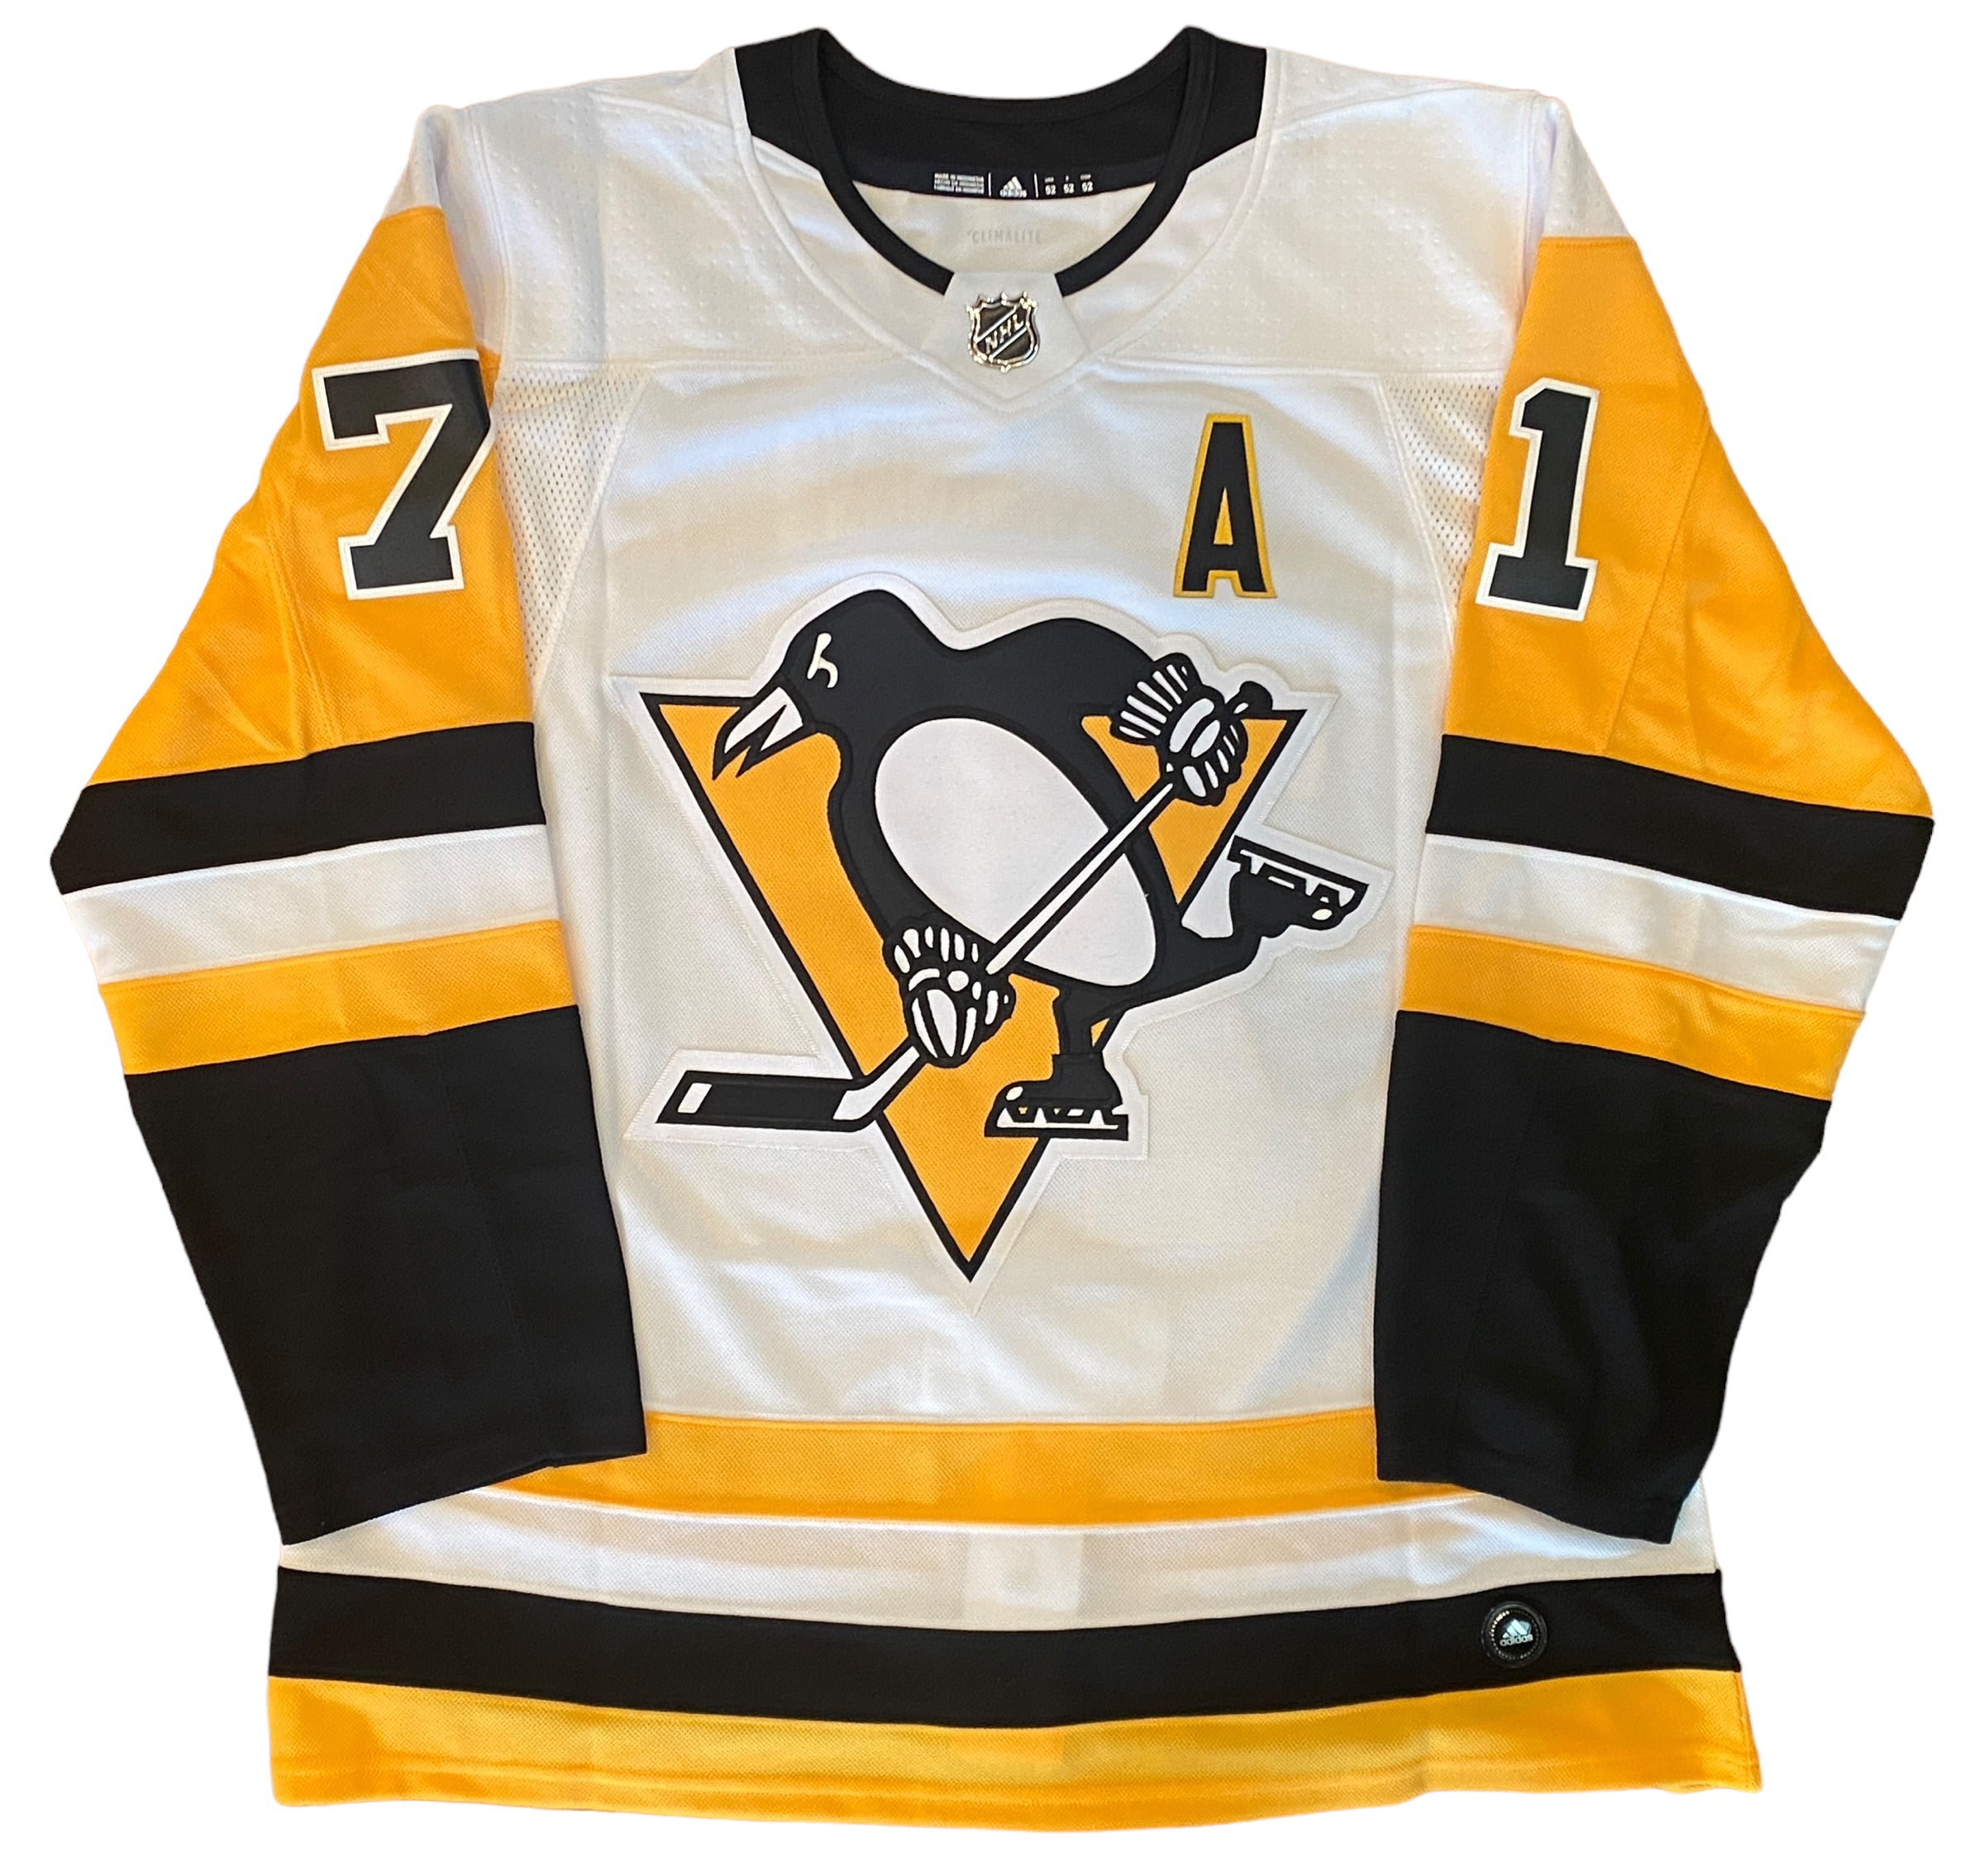 adidas Men's Pittsburgh Penguins Evgeni Malkin #71 Authentic Pro